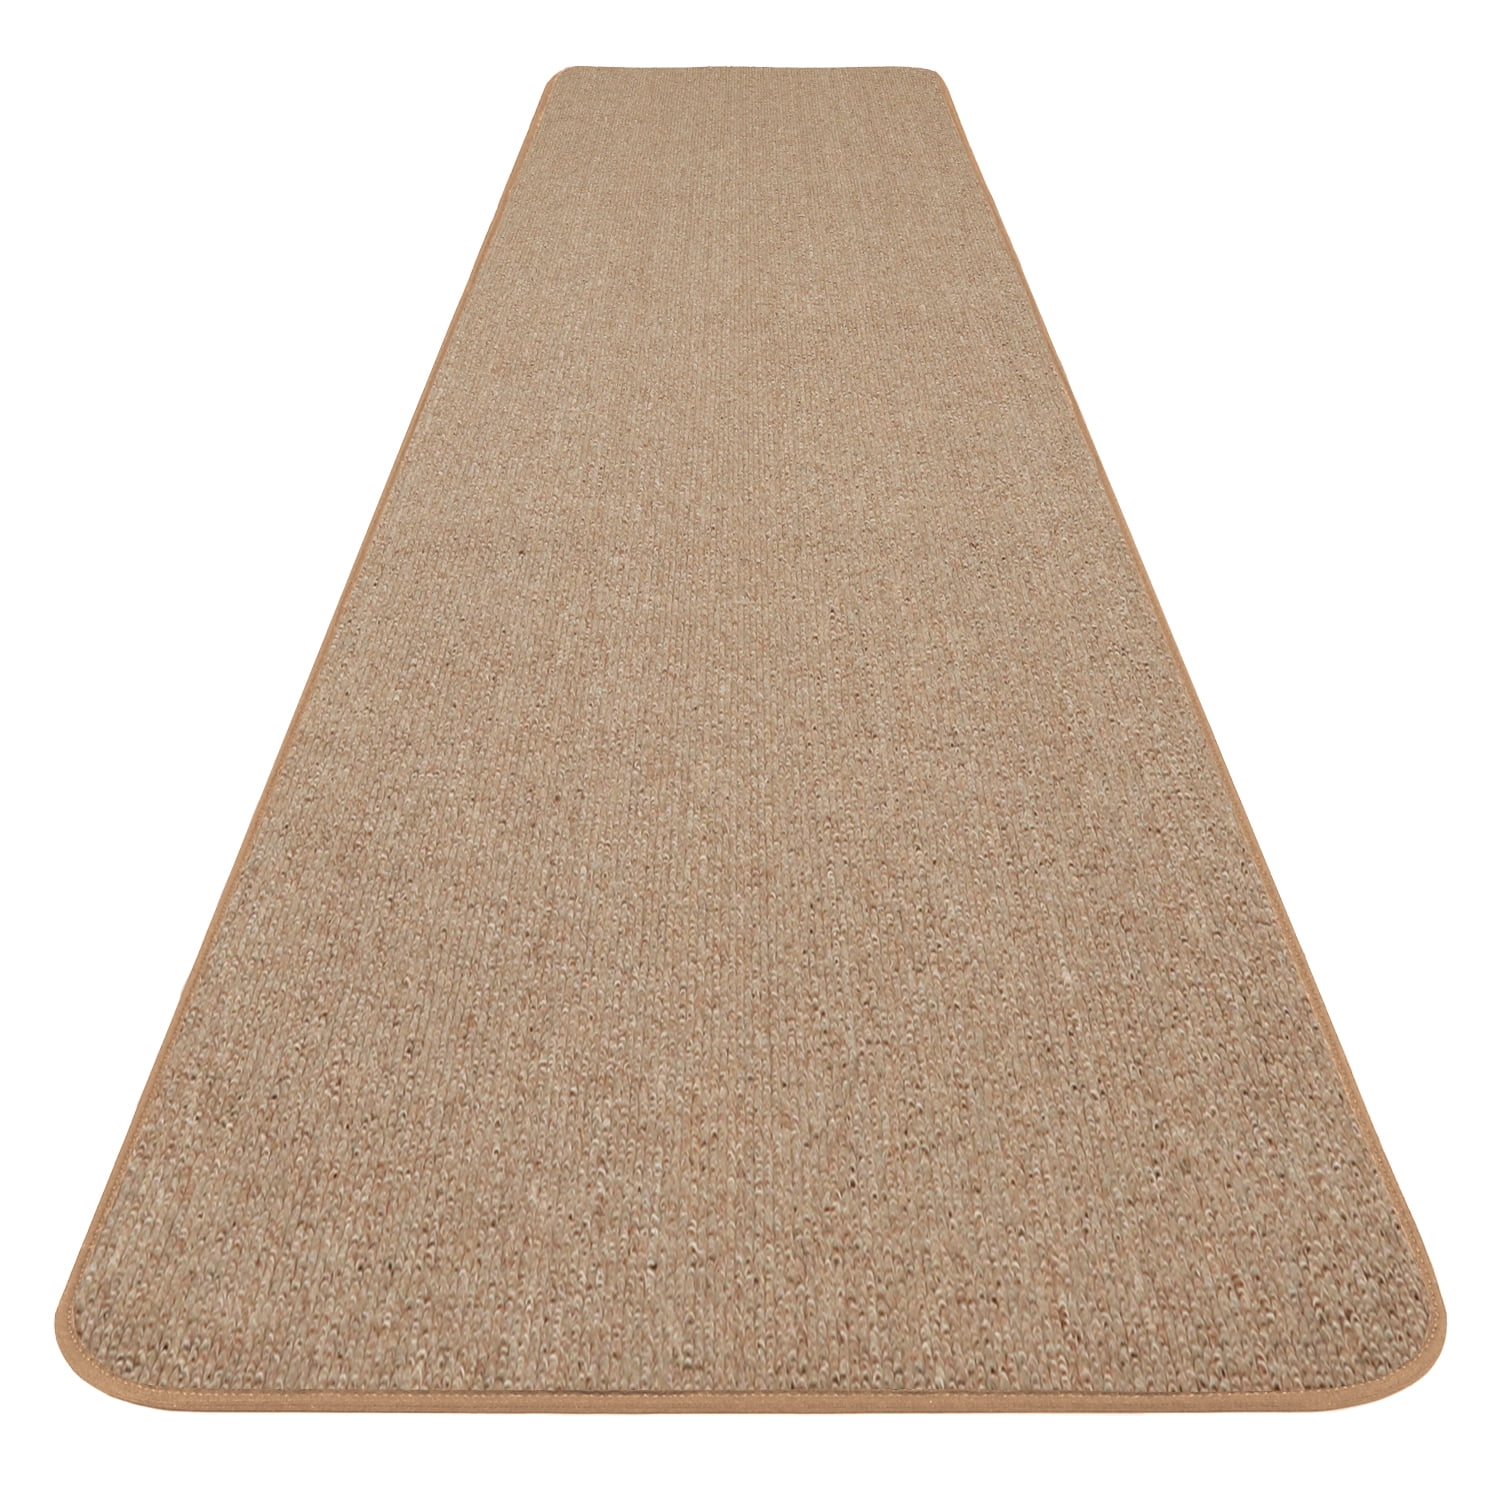 14 ft x 36 in SKID-RESISTANT Carpet Runner IVORY CREAM hall area rug floor mat 